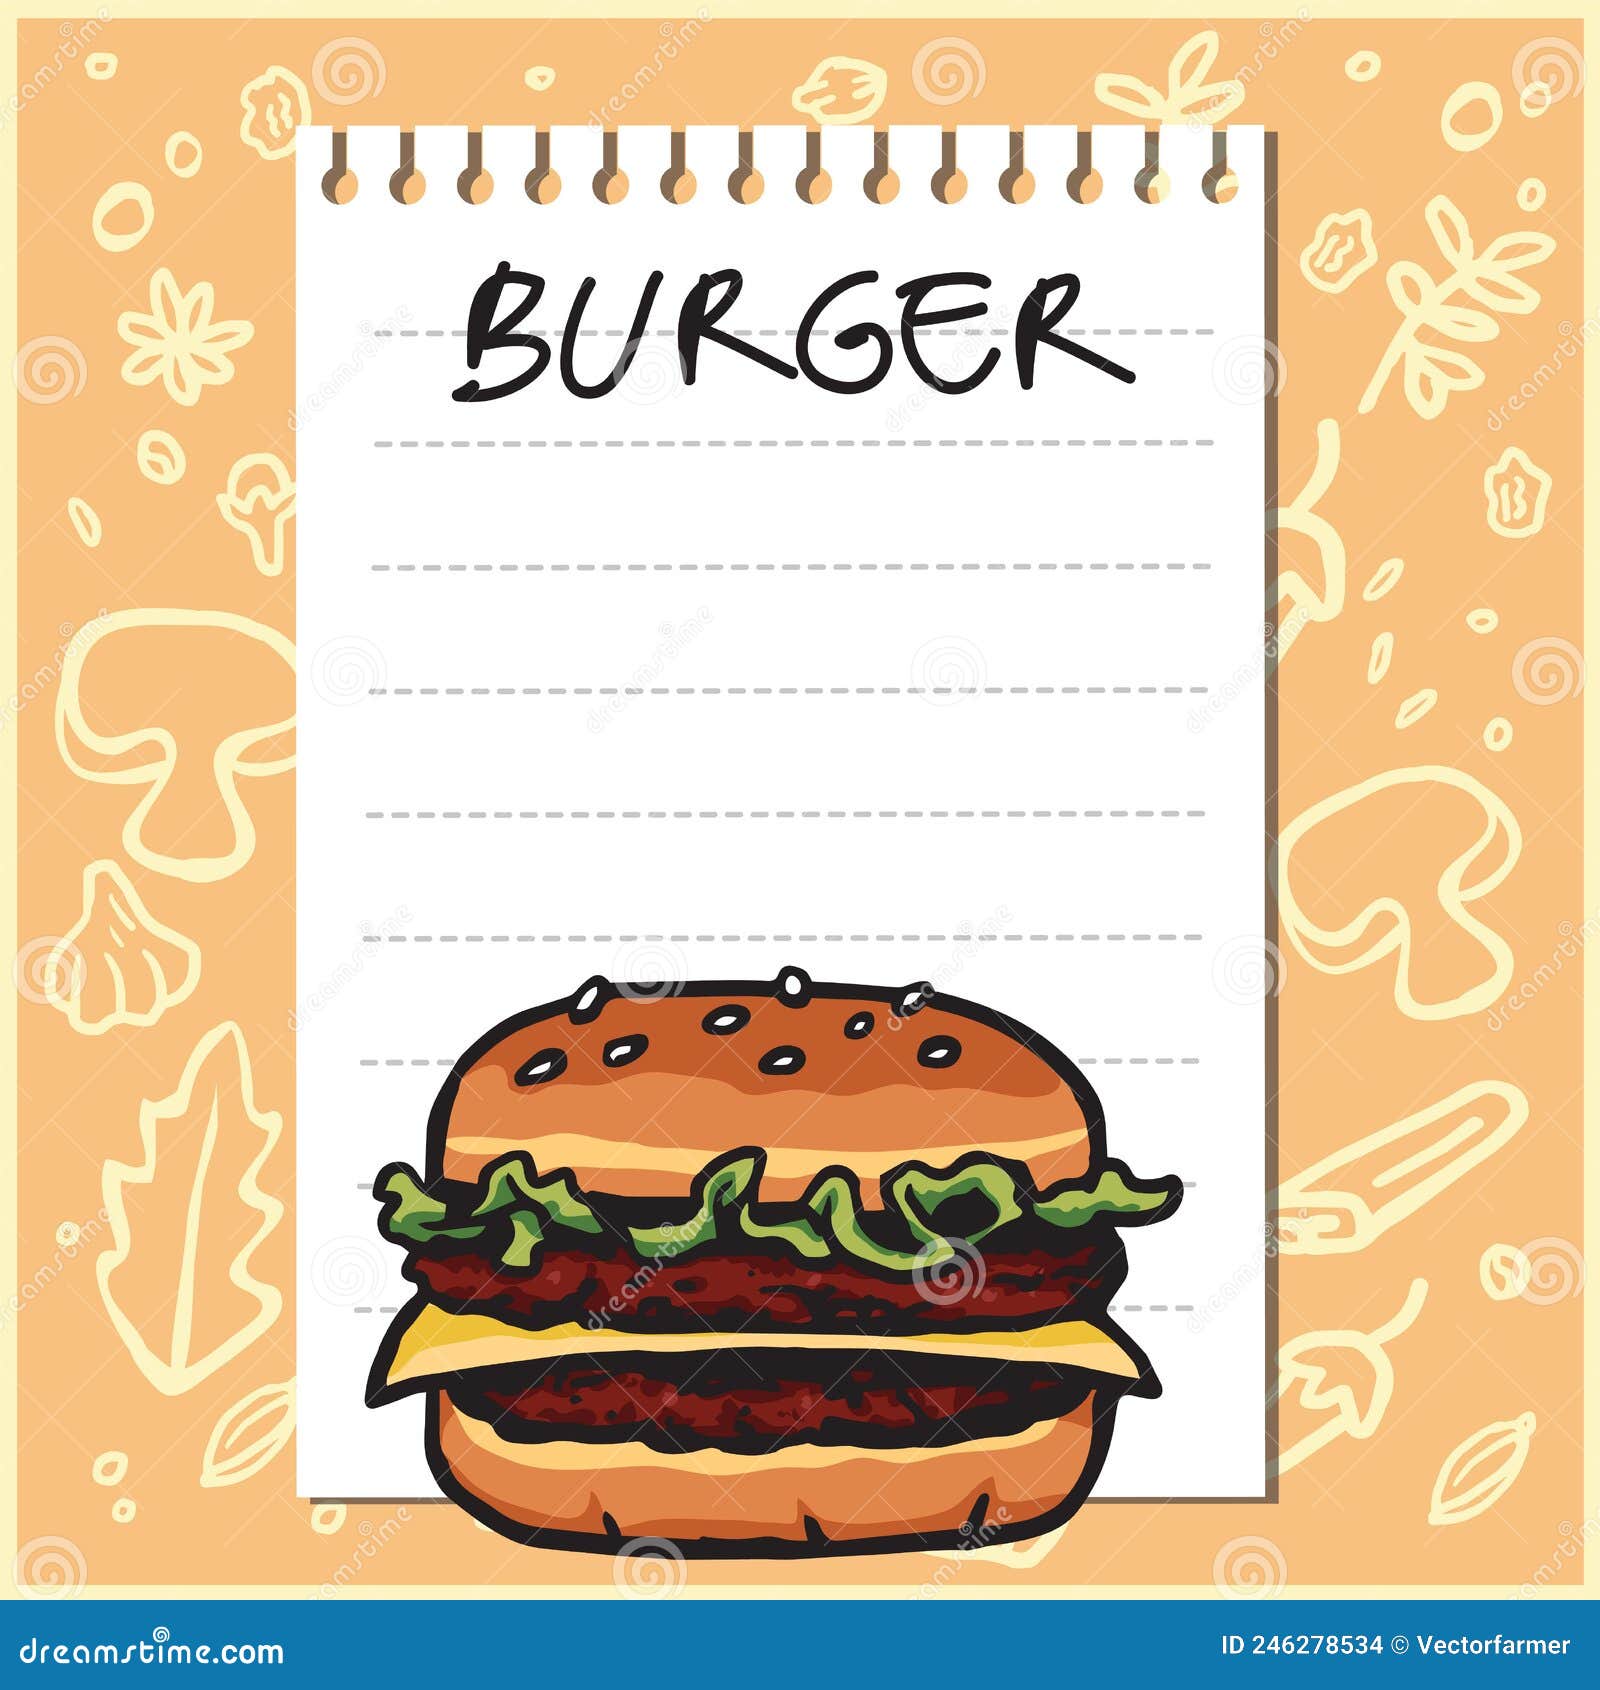 Premium Vector  Tasty hamburger or cheeseburger fast food sticker